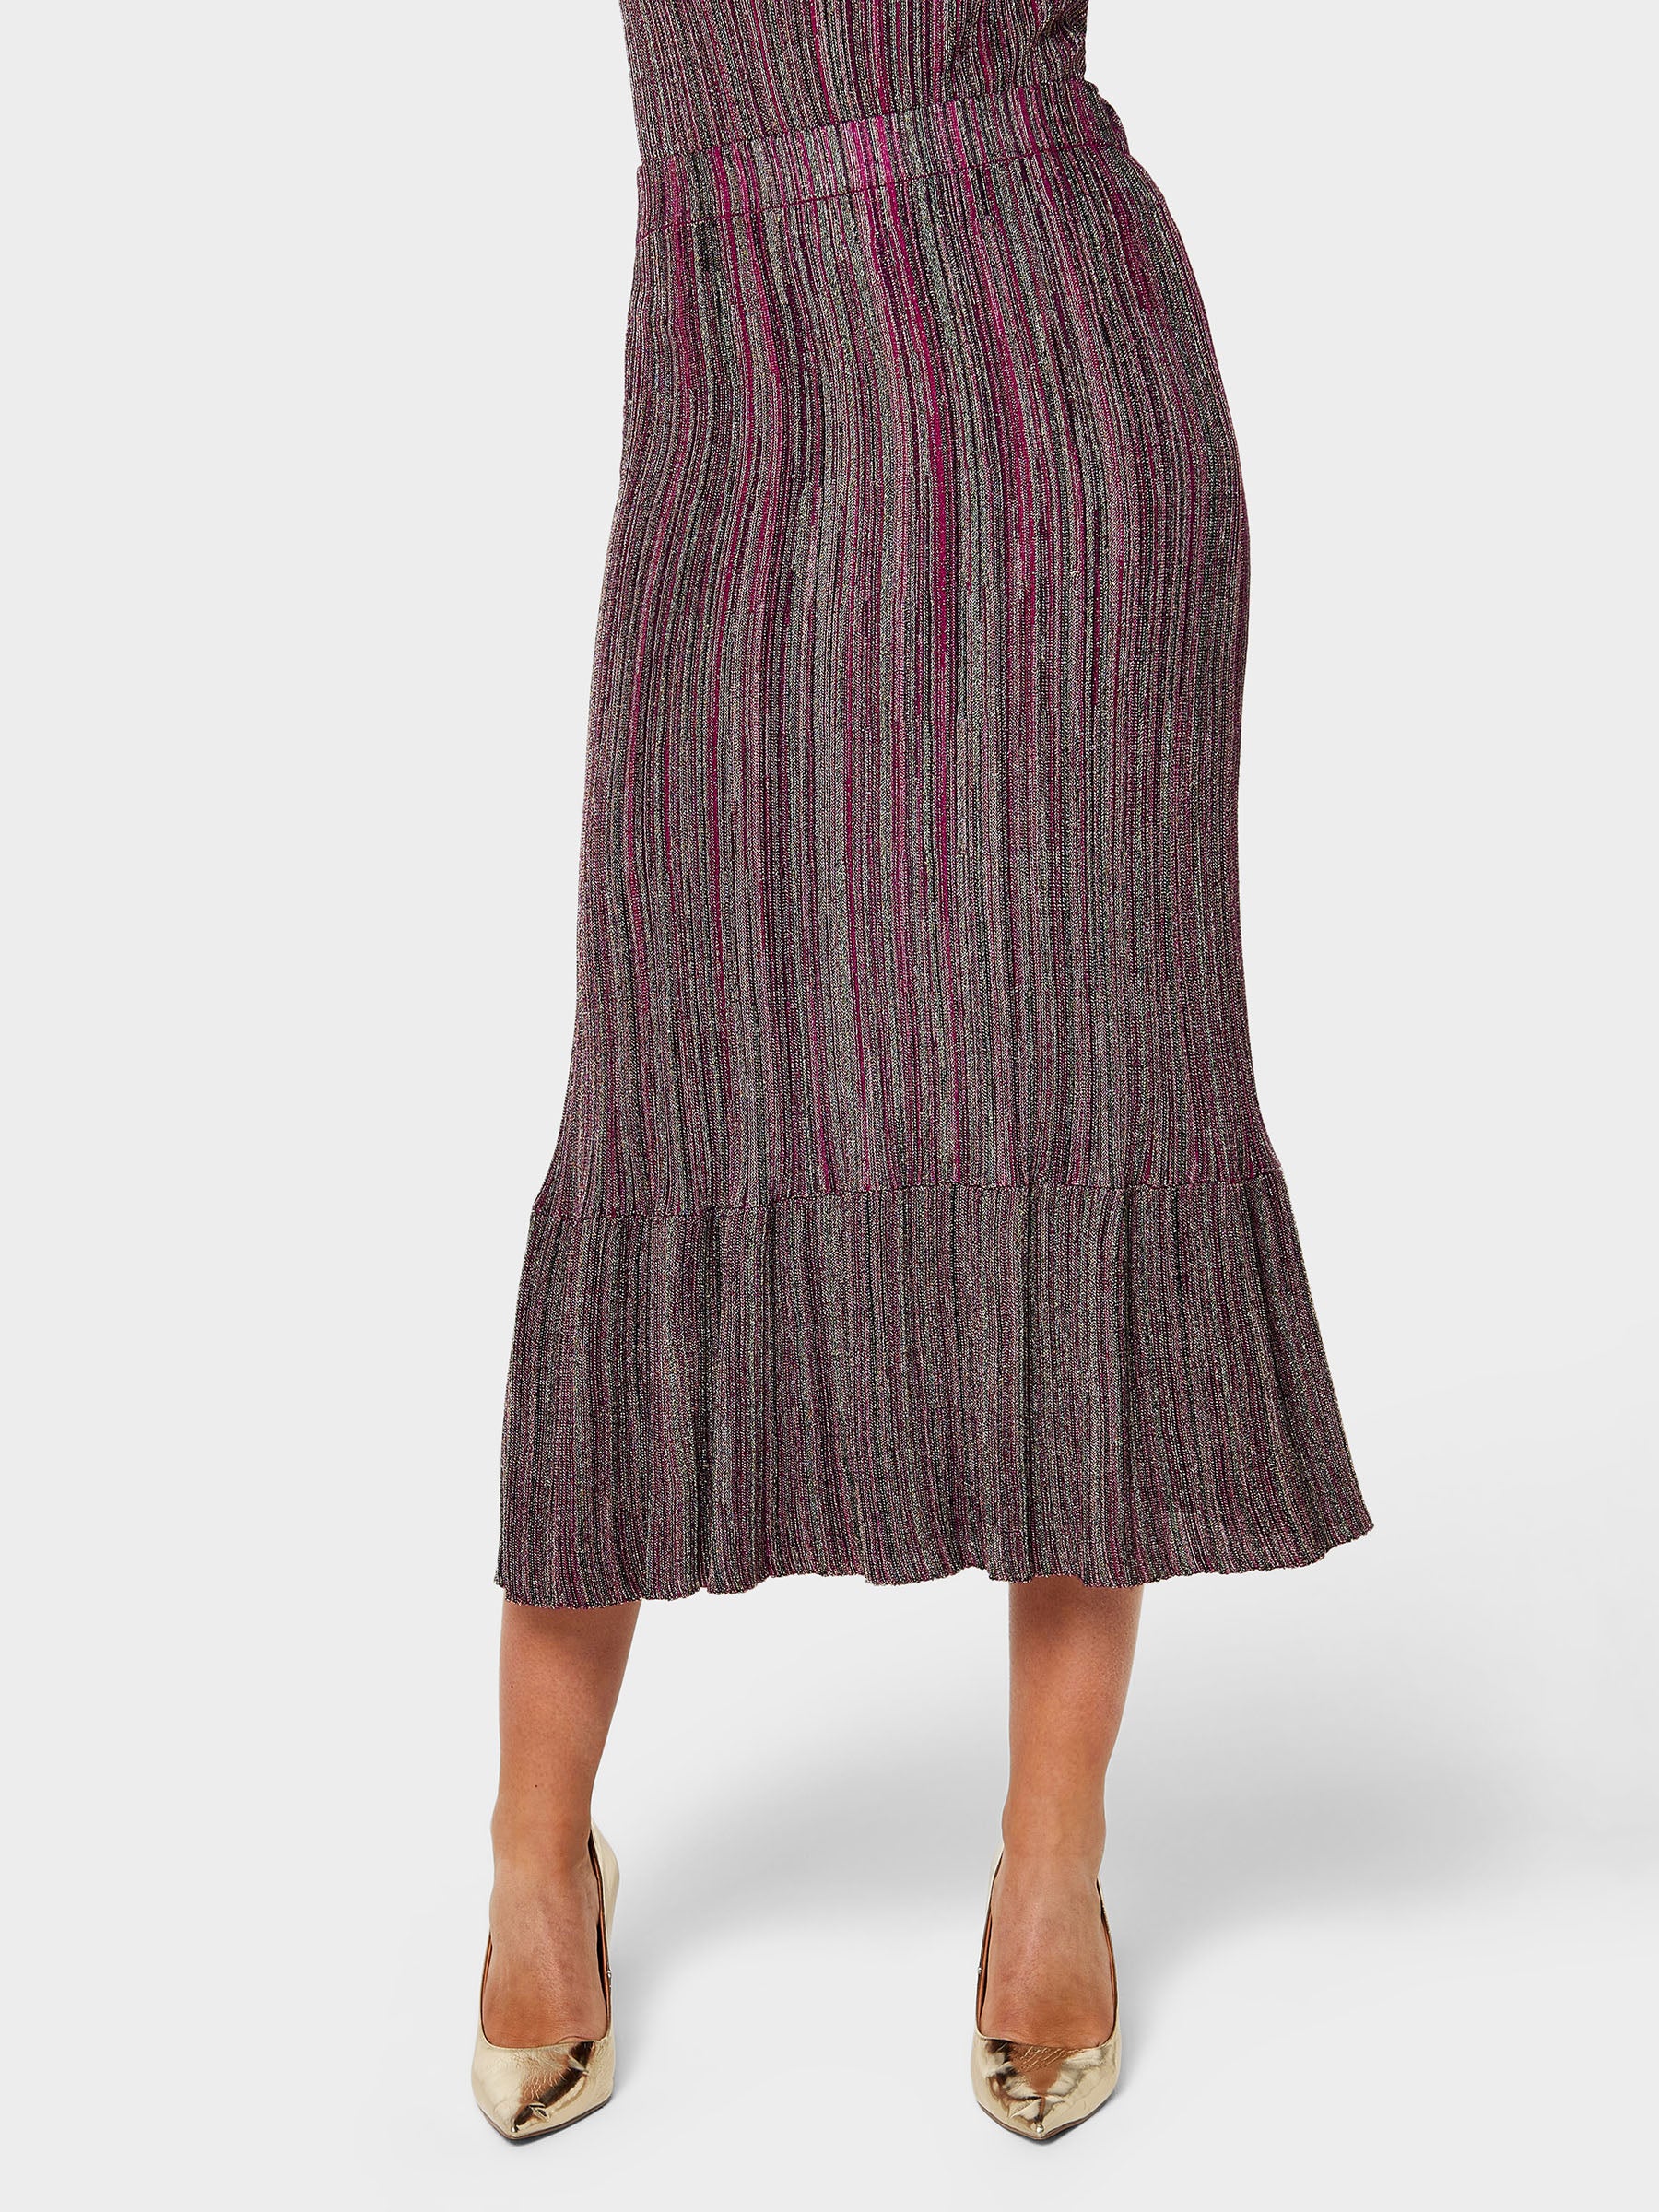 Jessica Knitted Skirt